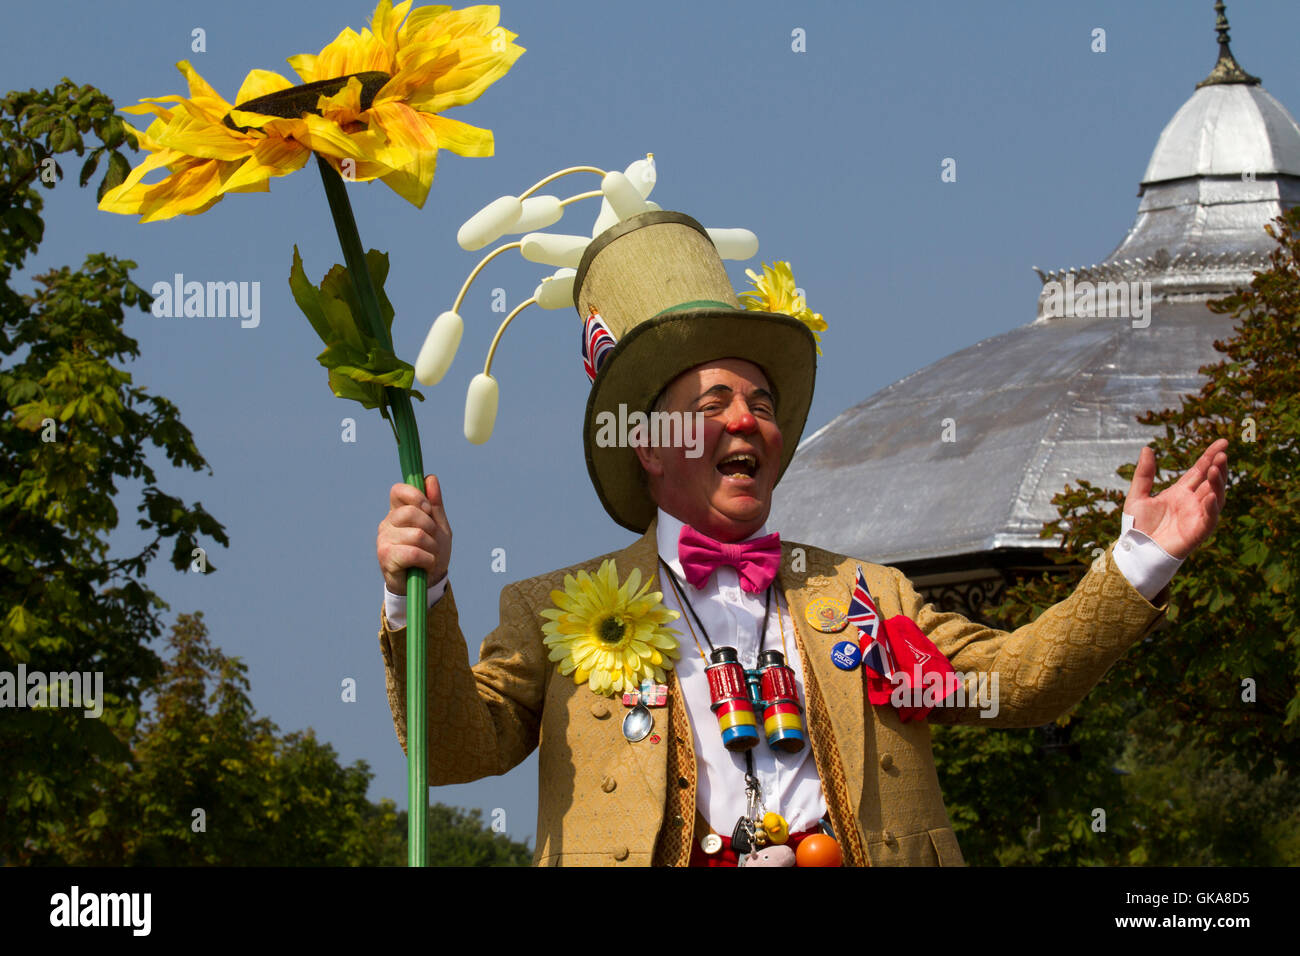 Clowning Professor Crump, alias Paul Goddard professional stilt walker clown at the Southport Flower Show, Merseyside, UK Stock Photo